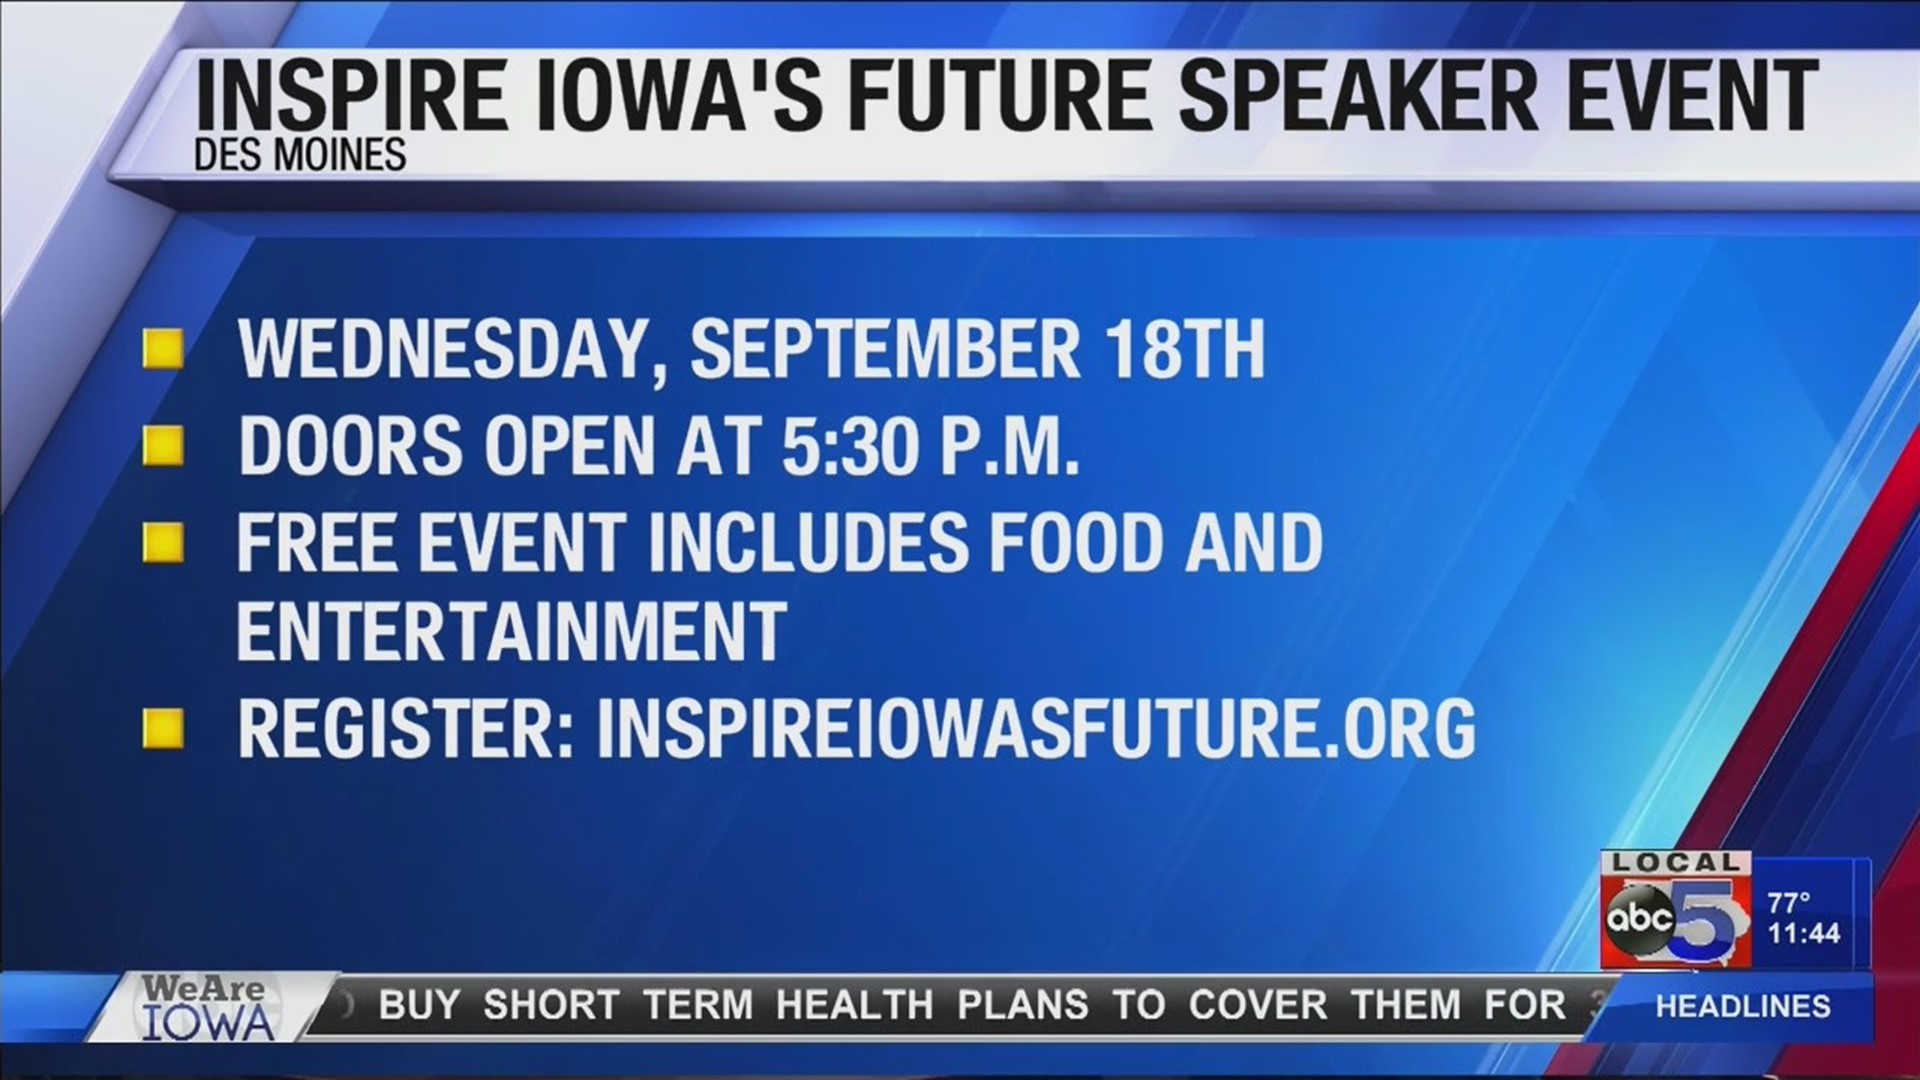 Inspire Iowa's Future Speaker Event is Wednesday, September 18th.